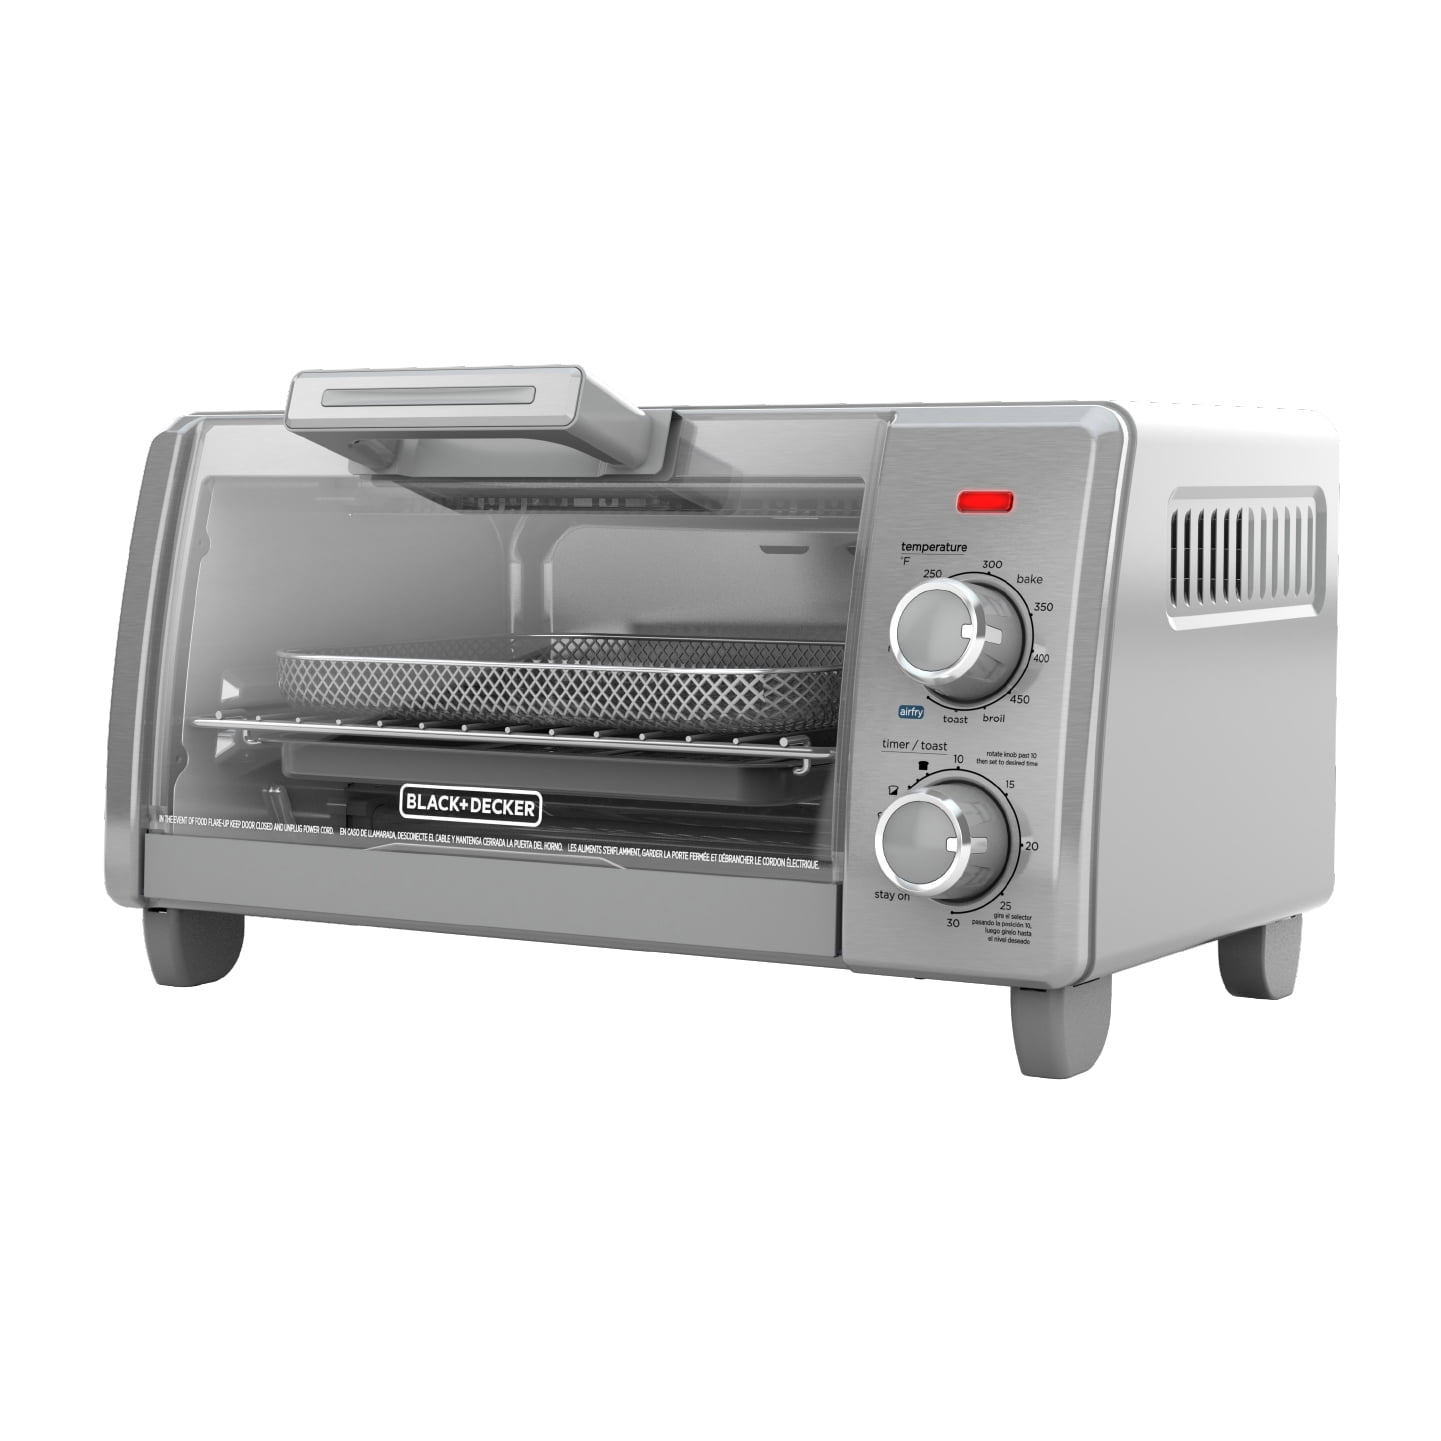 black-decker-crisp-n-bake-air-fry-4-slice-toaster-oven-silver-black